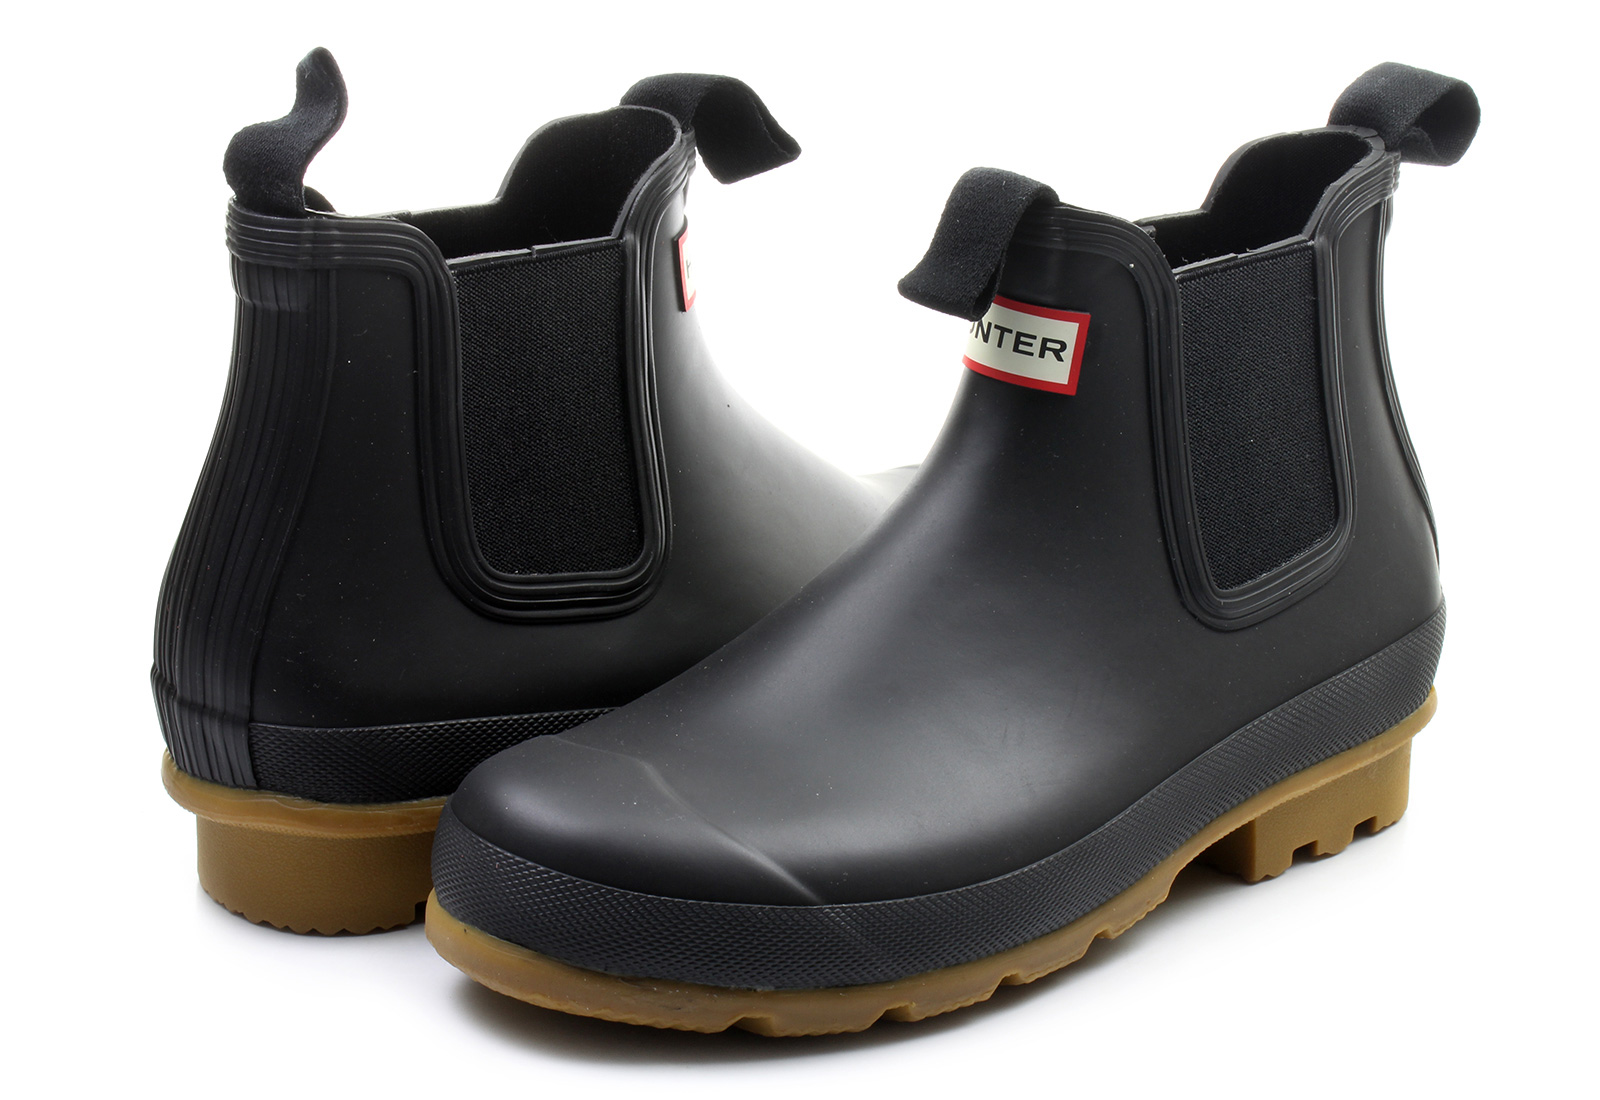 Hunter Boots - Mens Original Gum Sole Chelsea - s9020rgu-blk - Online ...